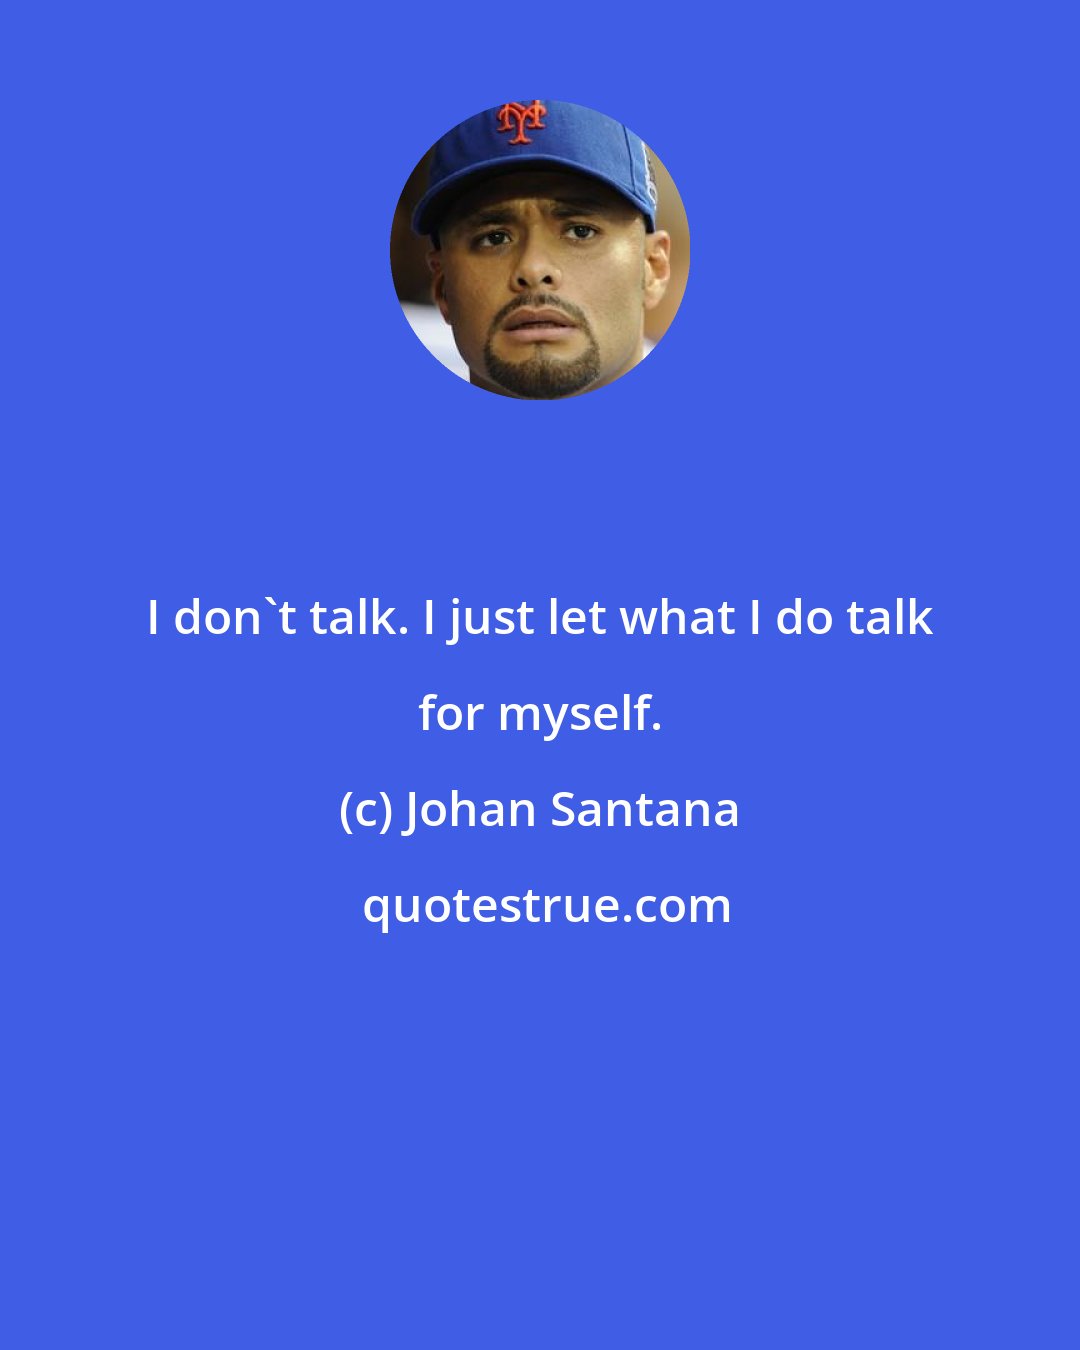 Johan Santana: I don't talk. I just let what I do talk for myself.